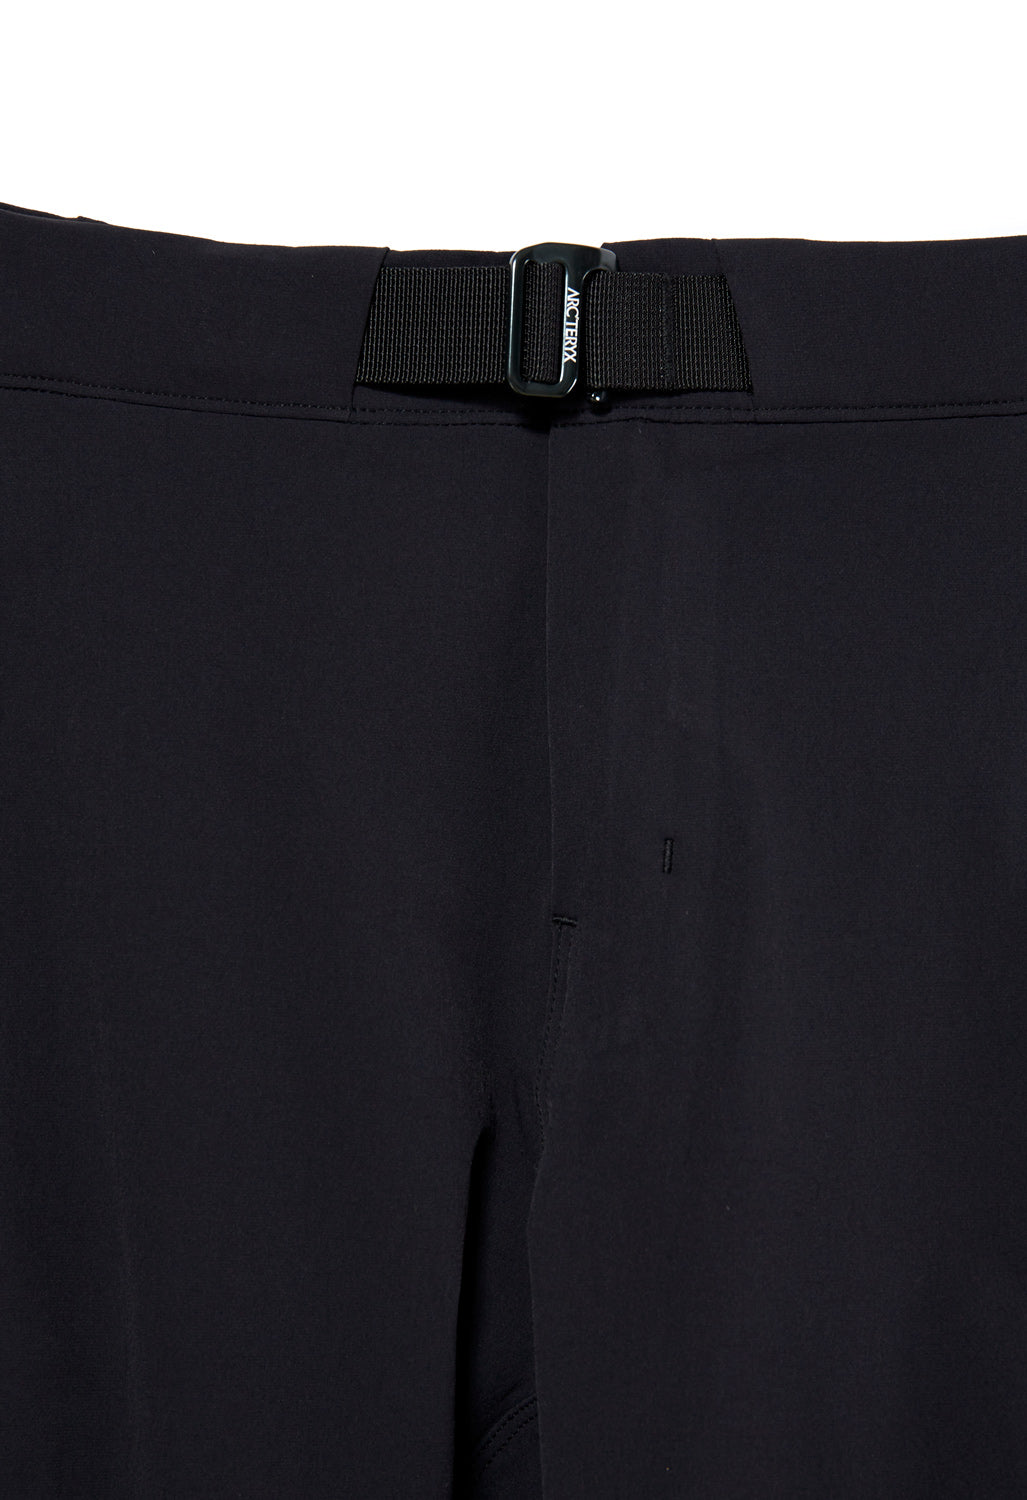 Arc'teryx Gamma LT Women's Pants - Black